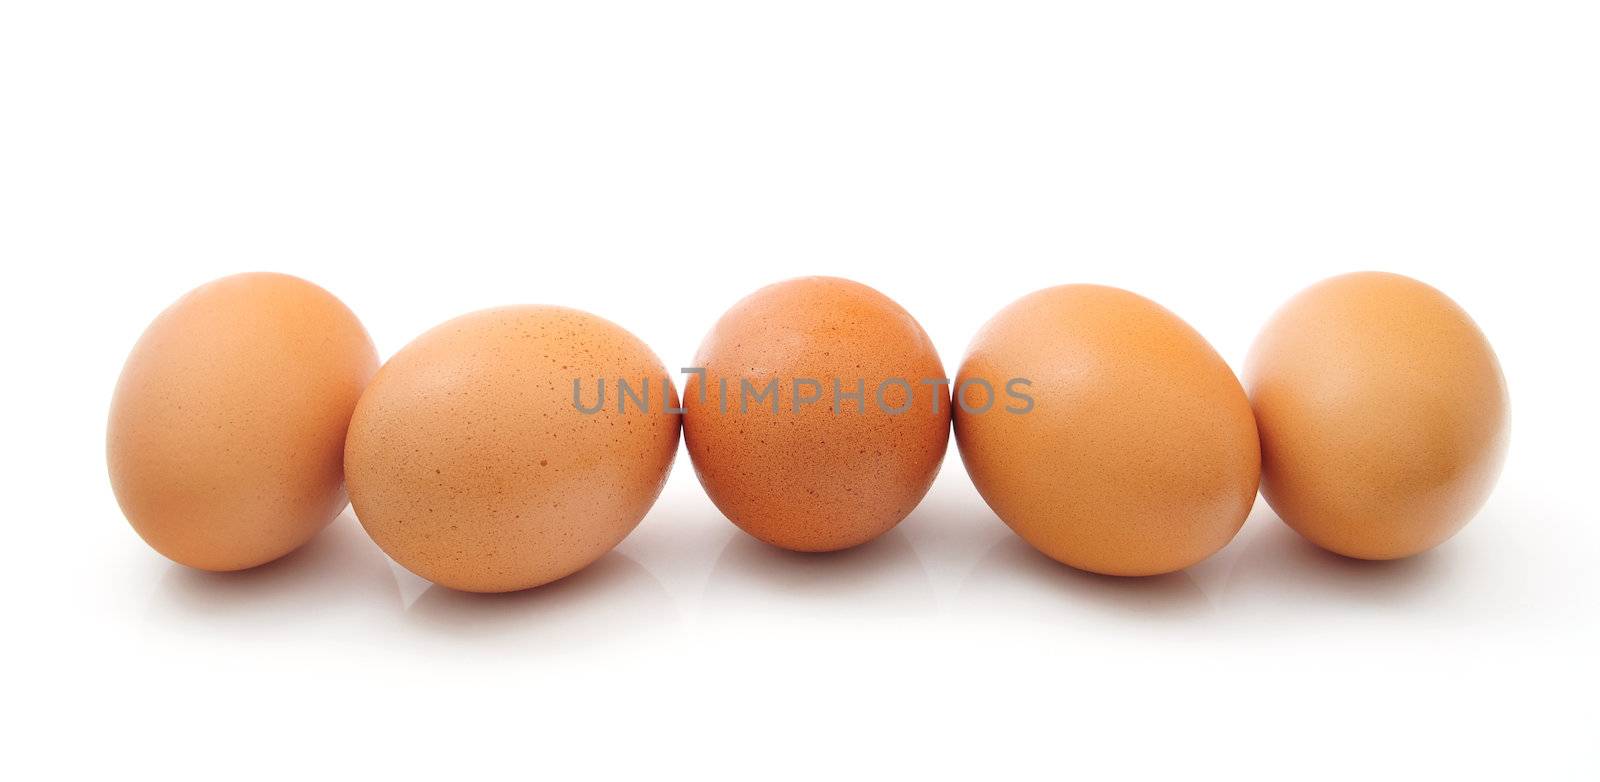 Eggs by antpkr